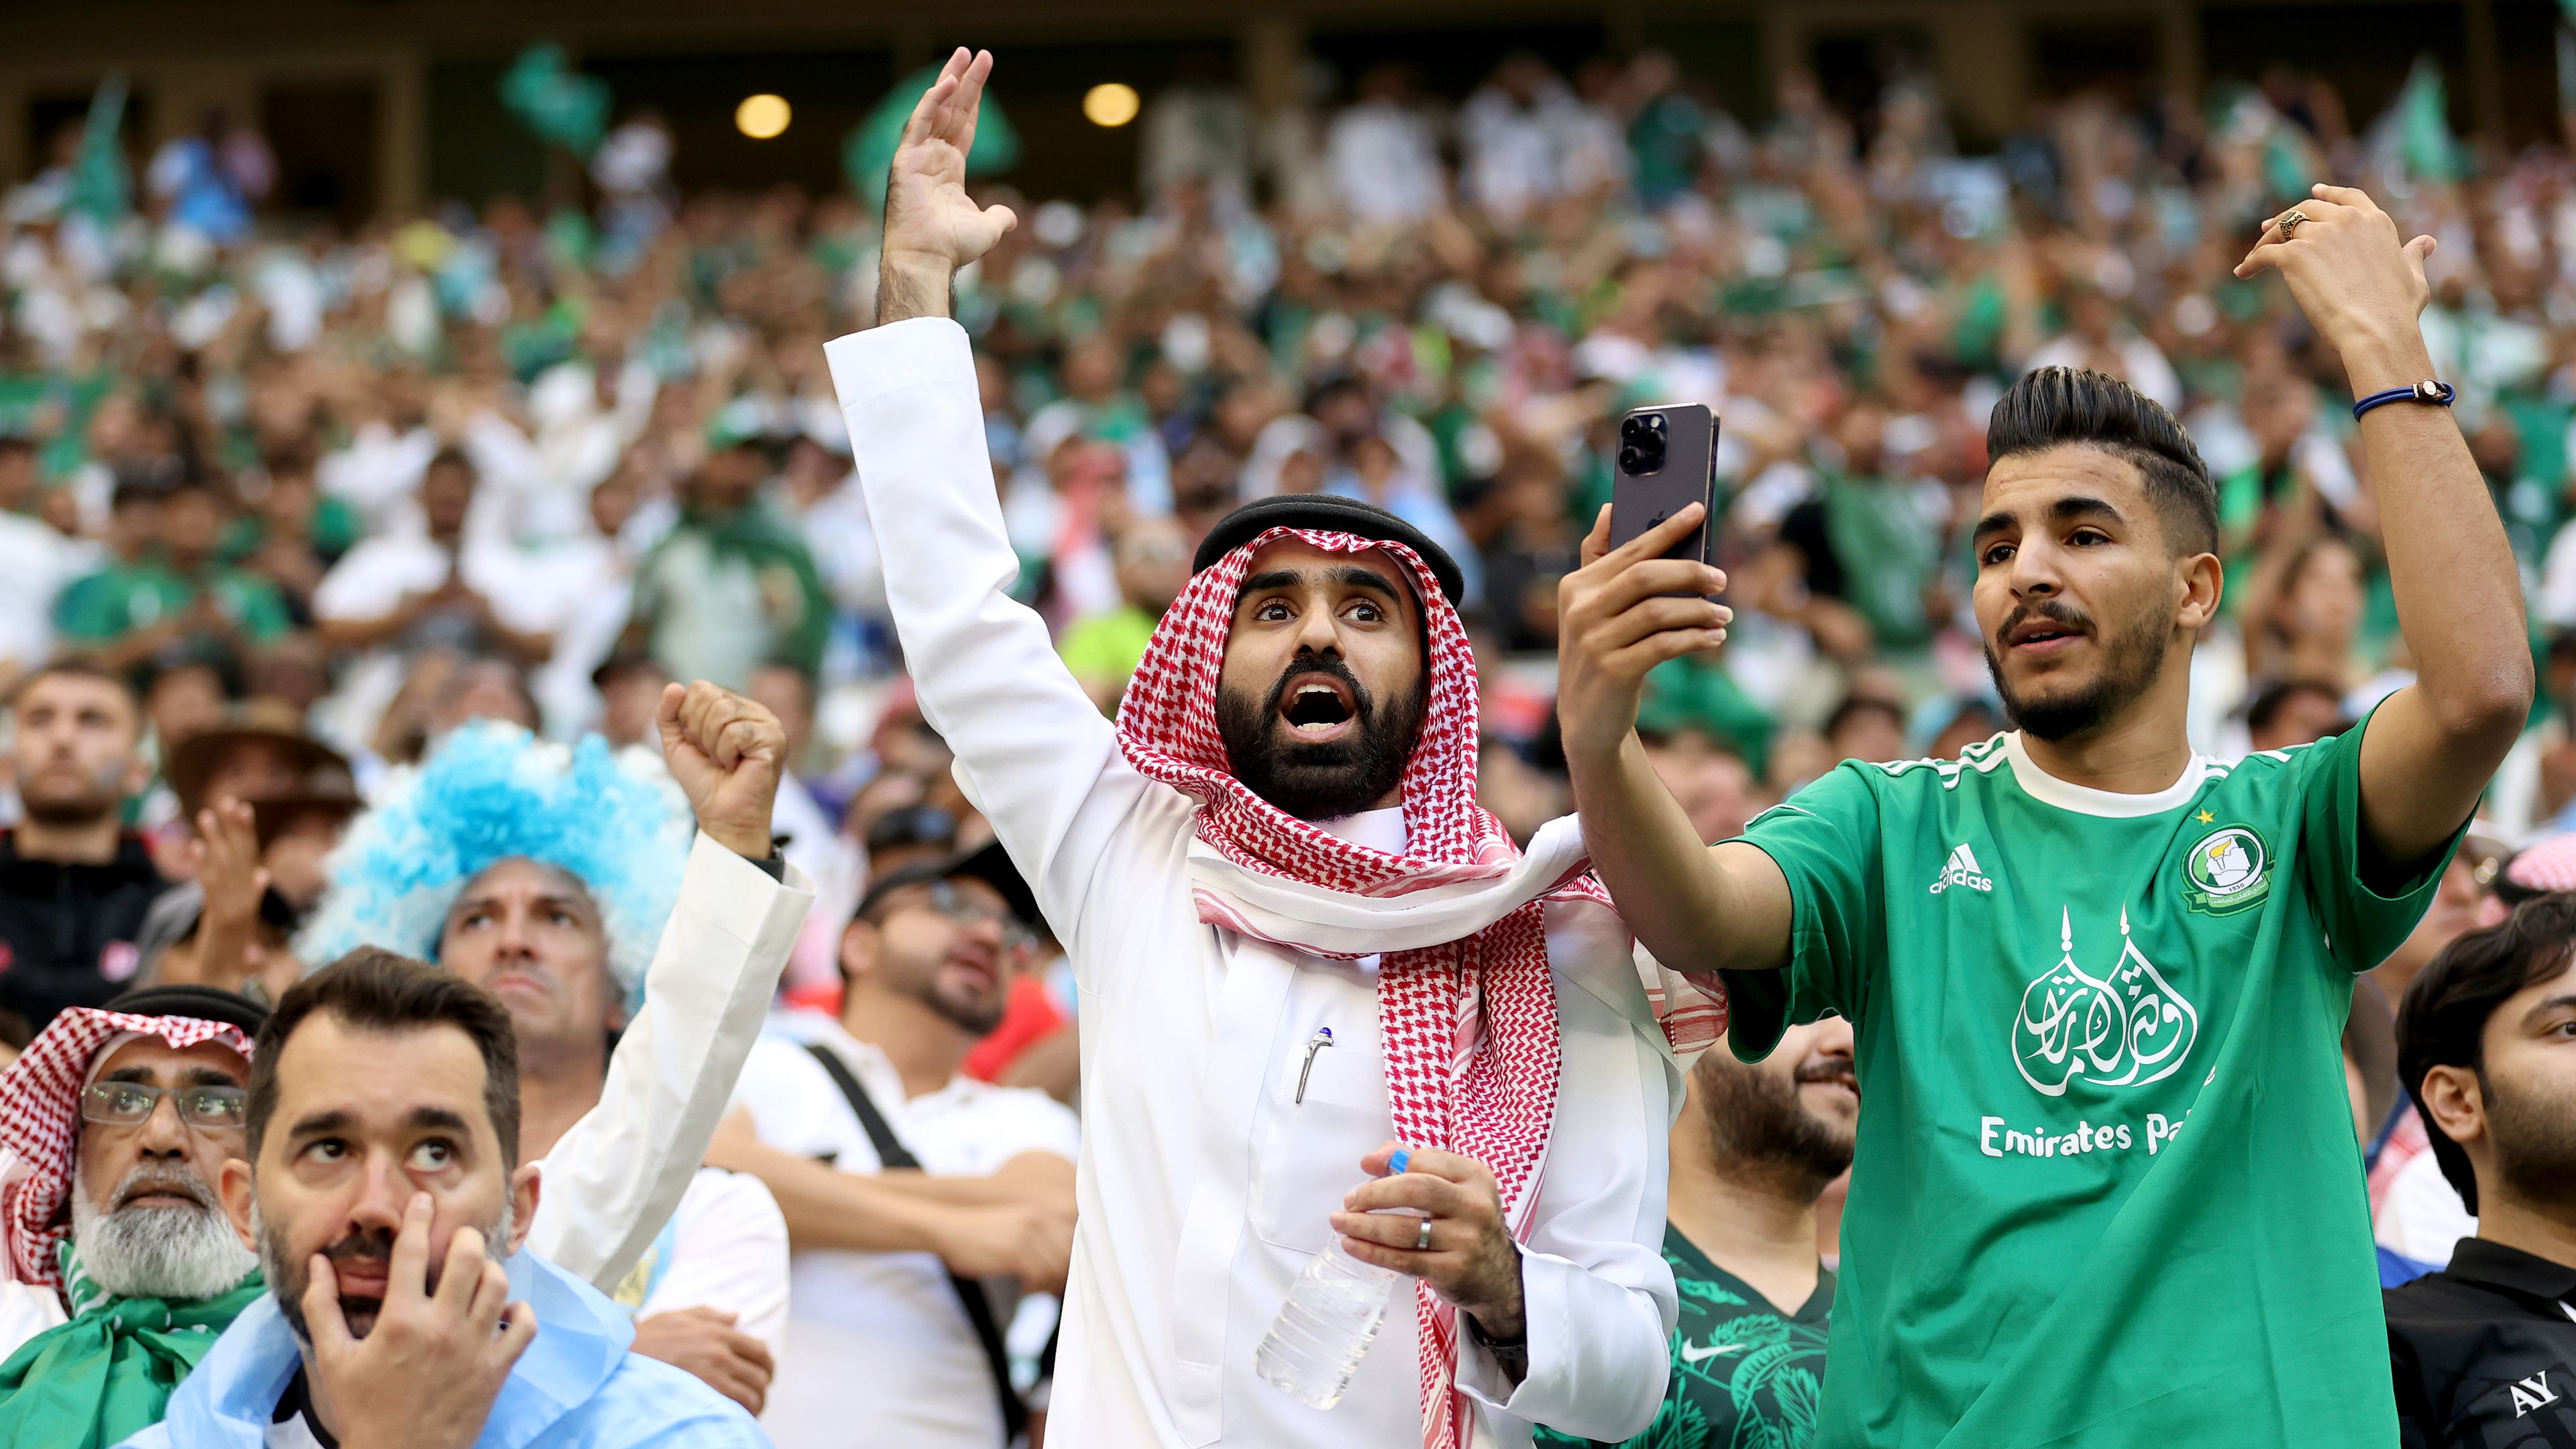 Katar 2022: a legboldogabb emberek a foci vb-n